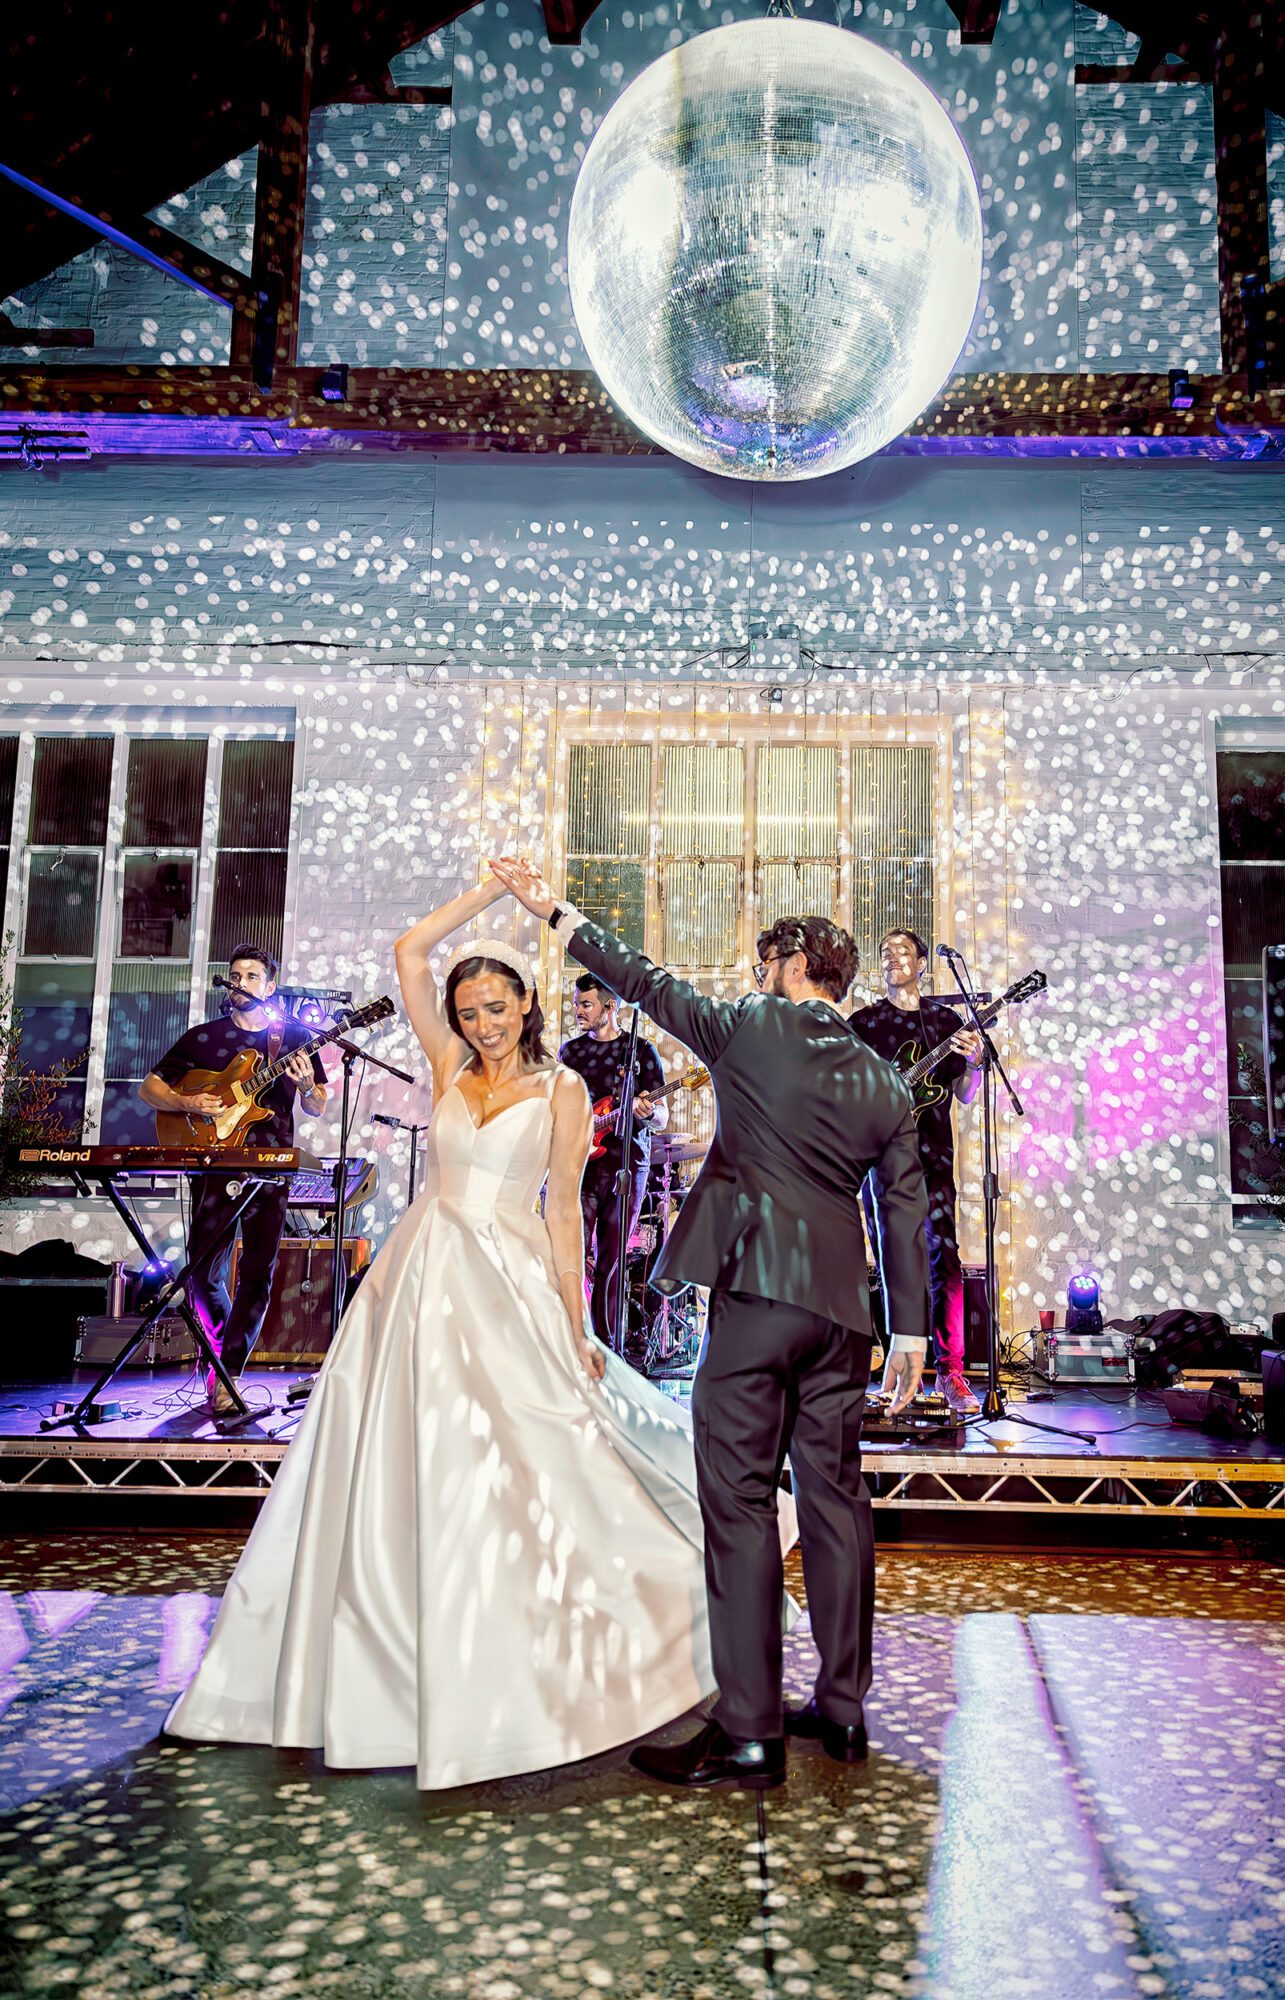 First dance image from Trinity Buoy Wharf wedding reception